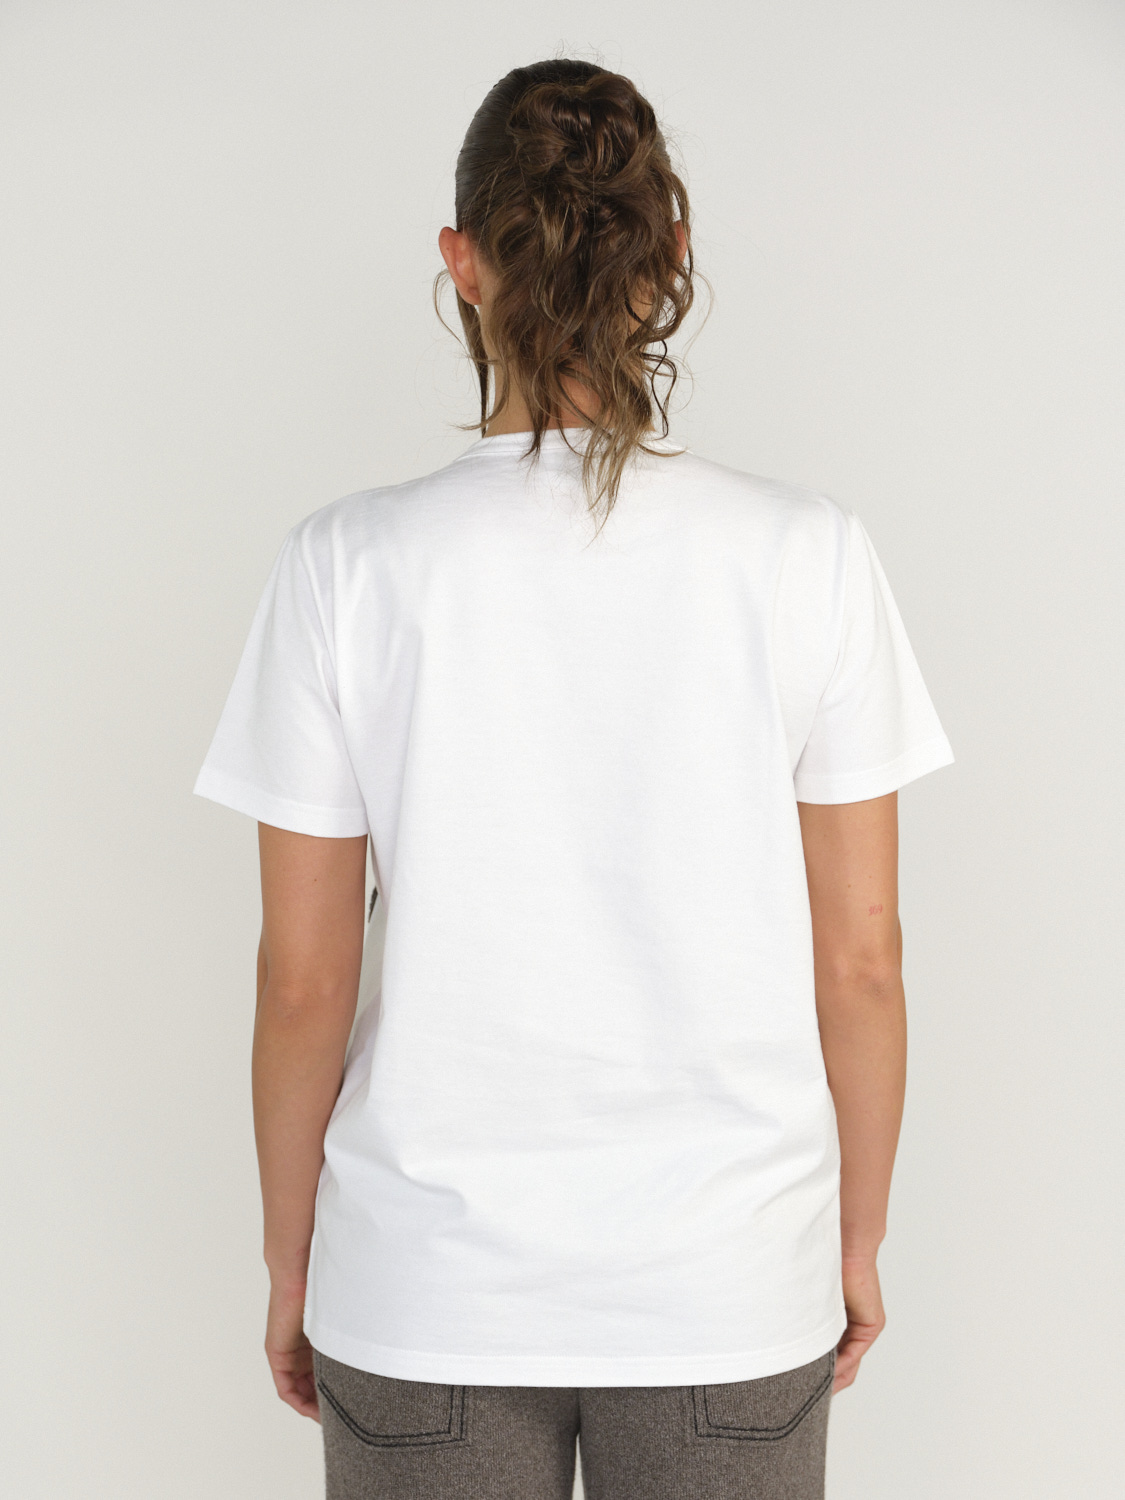 Barrie Barrie - Cardo - Barrie - Cardo - T-shirt con applicazioni in cashmere beige XS